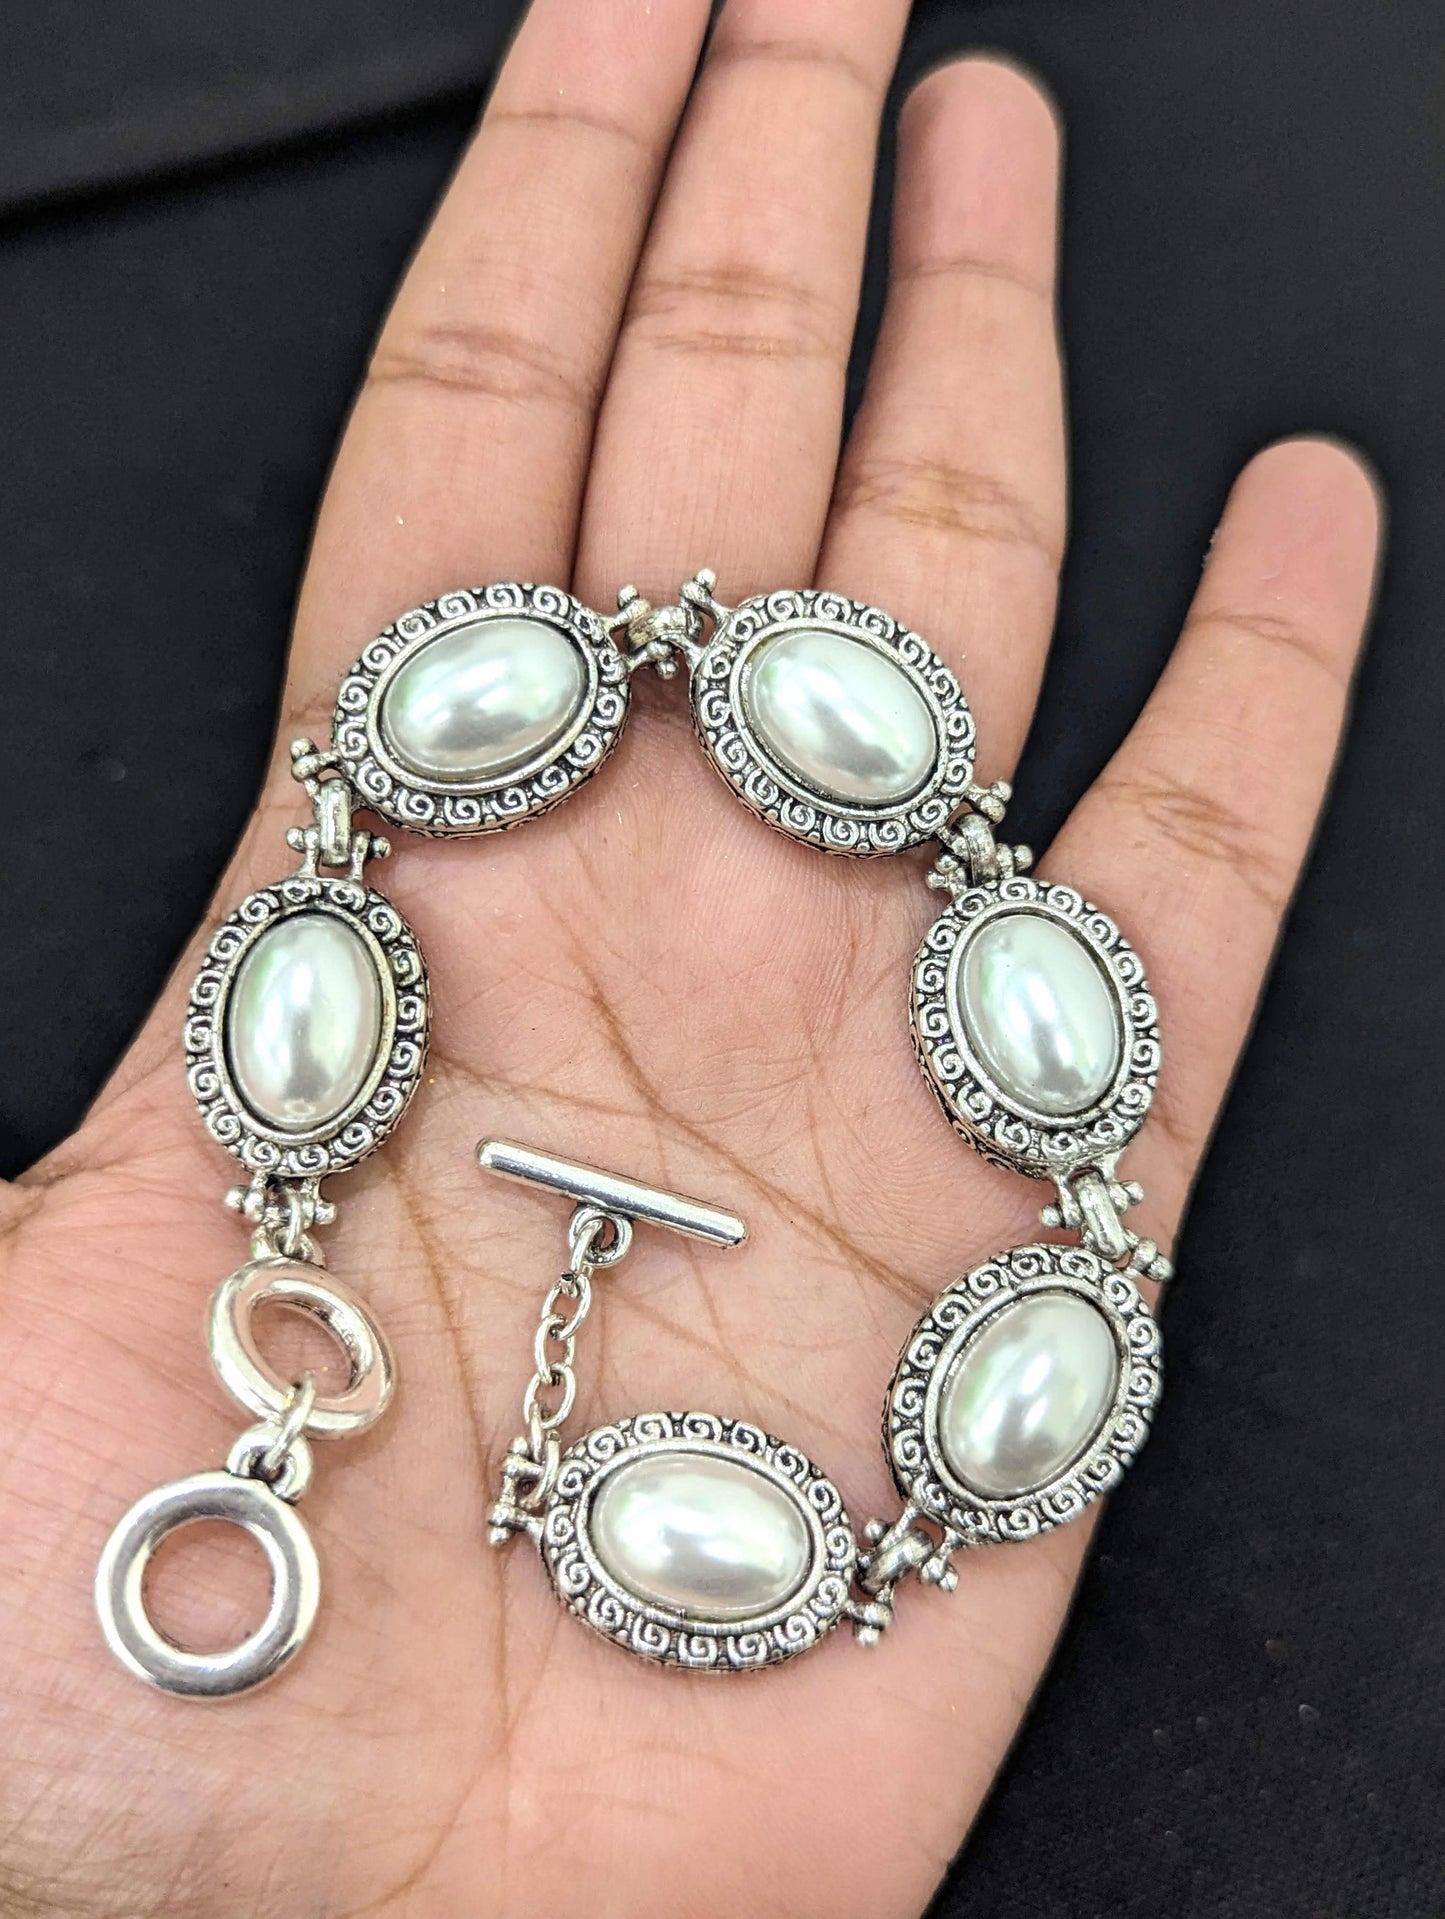 Antique Silver Oval Pearl Bracelet